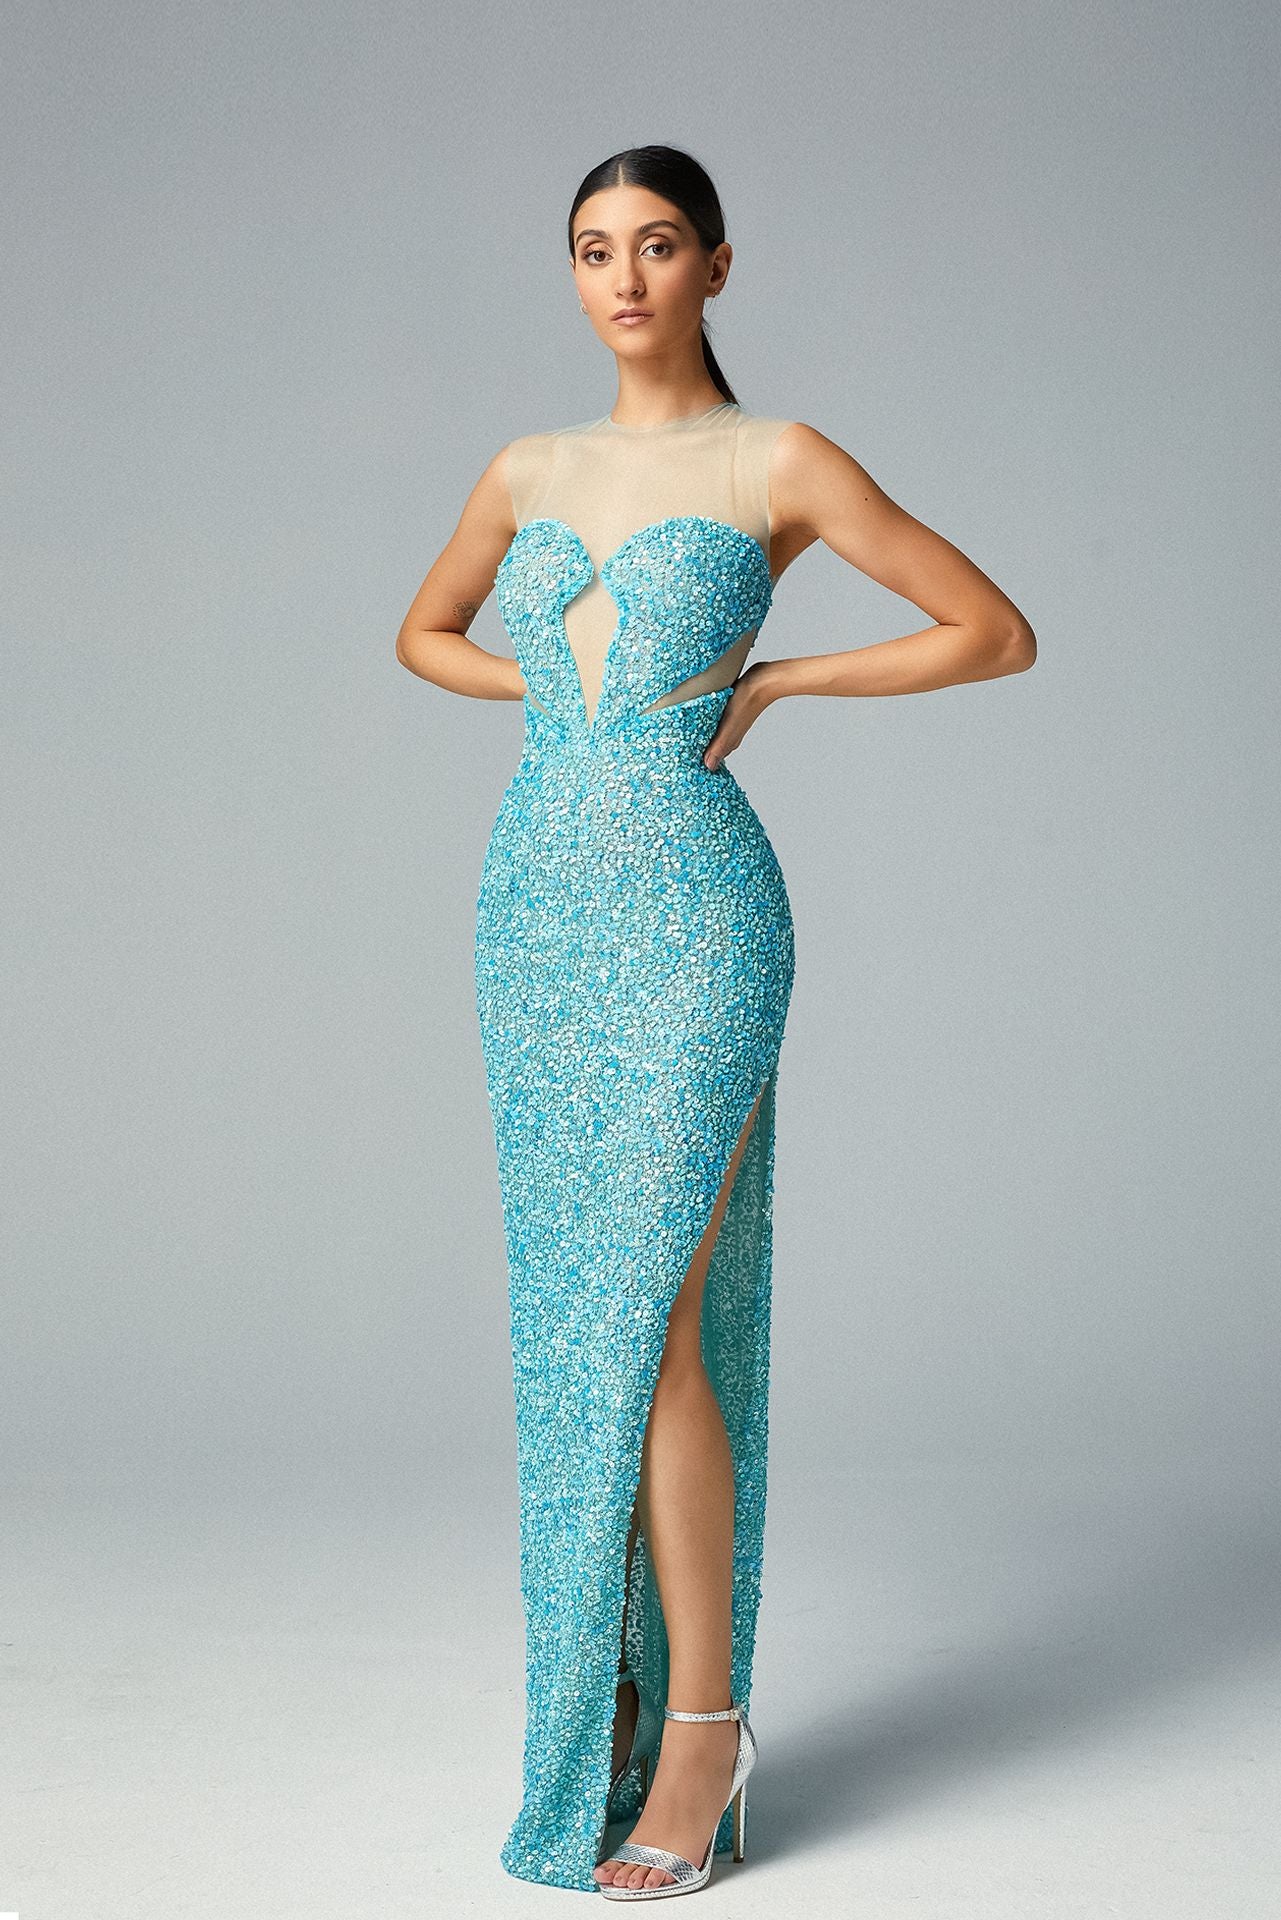 Off-shoulder Aqua Blue Evening Dress Sequined from Top to Tip-toe Sui Generis Design Neckline